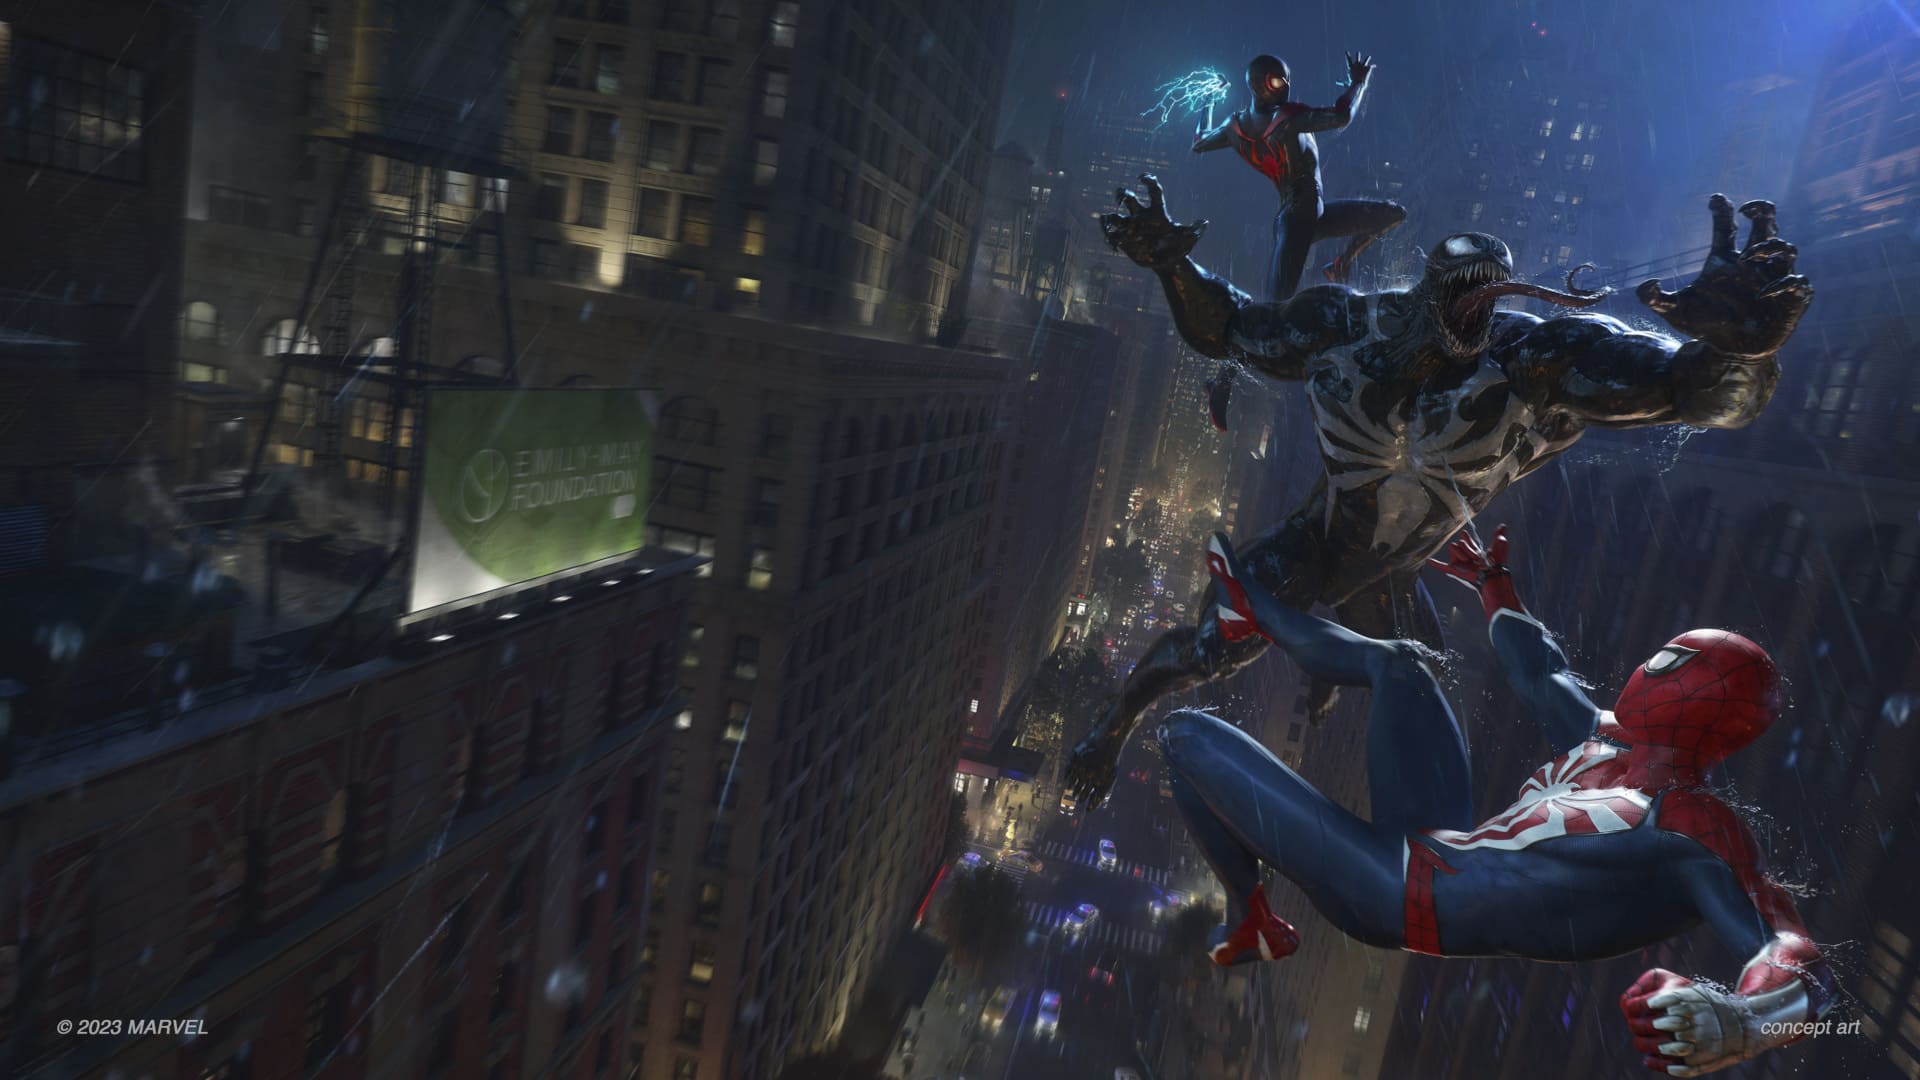 Marvel’s Spider-Man 2 將於 2023 年 10 月 20 日星期五在 PlayStation 5 上獨家推出 @3C 達人廖阿輝